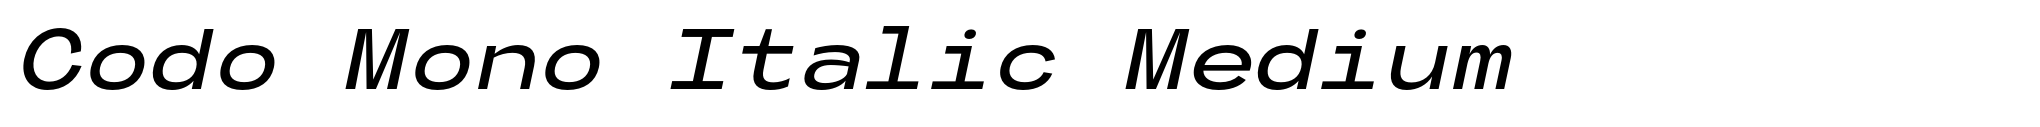 Codo Mono Italic Medium image